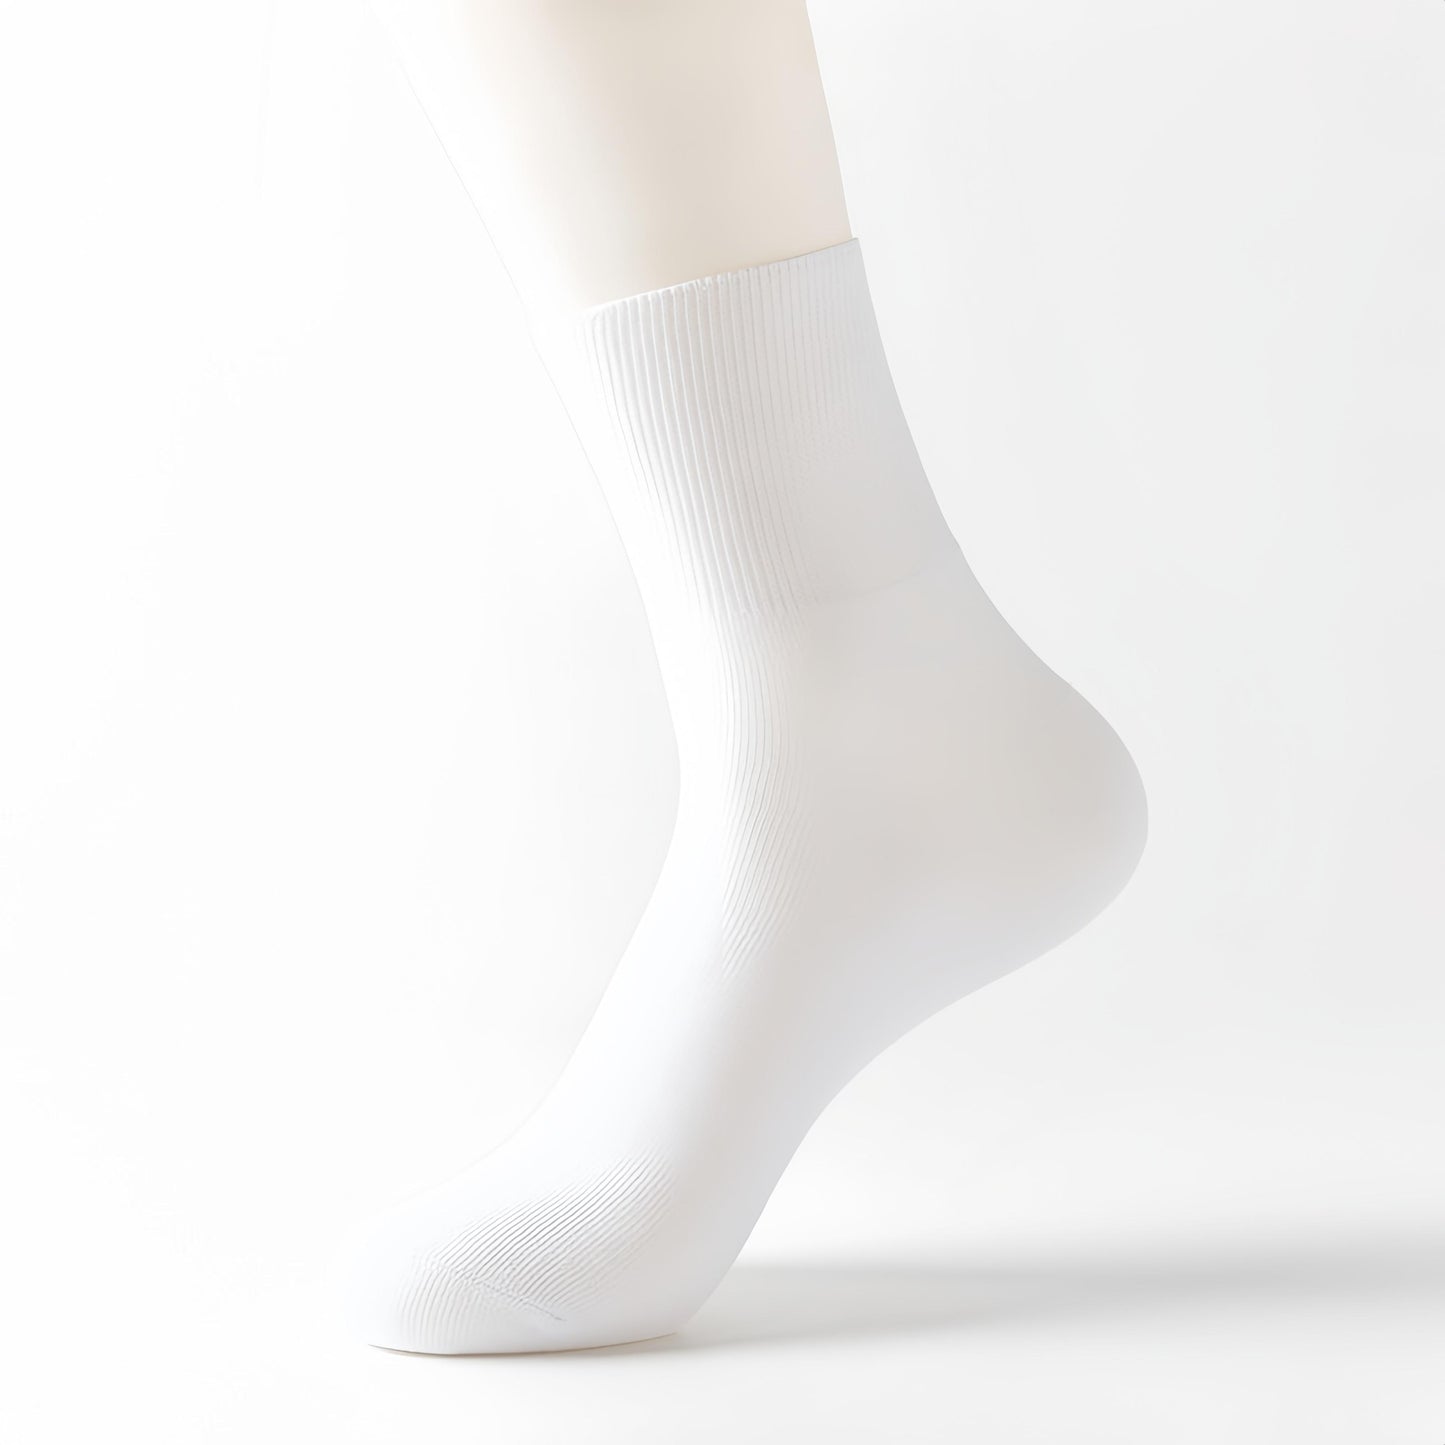 Cotton Diabetic Socks 5 Pairs